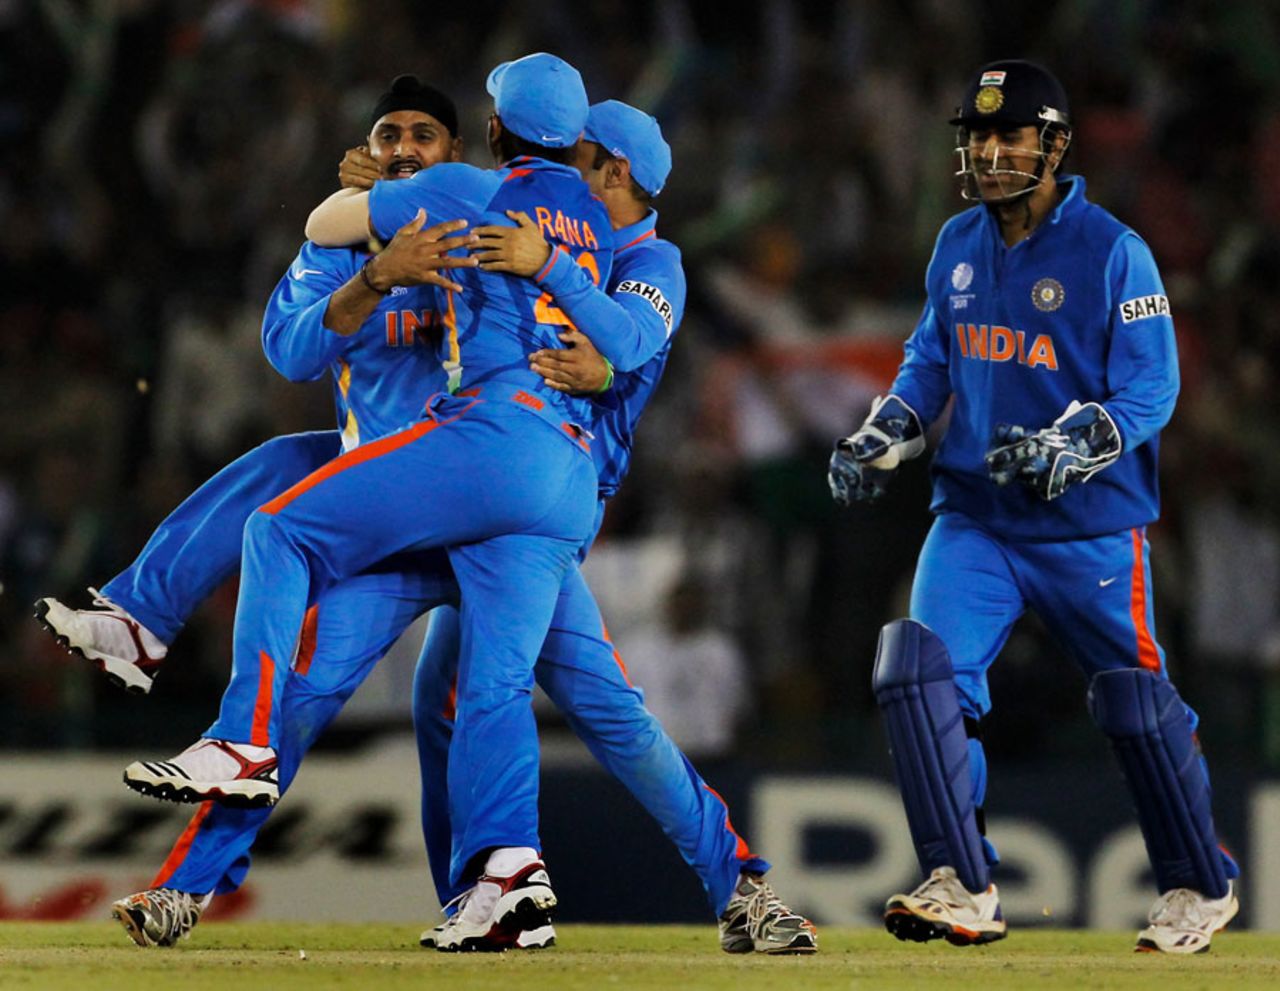 Harbhajan Singh got the key wicket of Umar Akmal, India v Pakistan, 2nd semi-final, World Cup 2011, Mohali, March 30, 2011